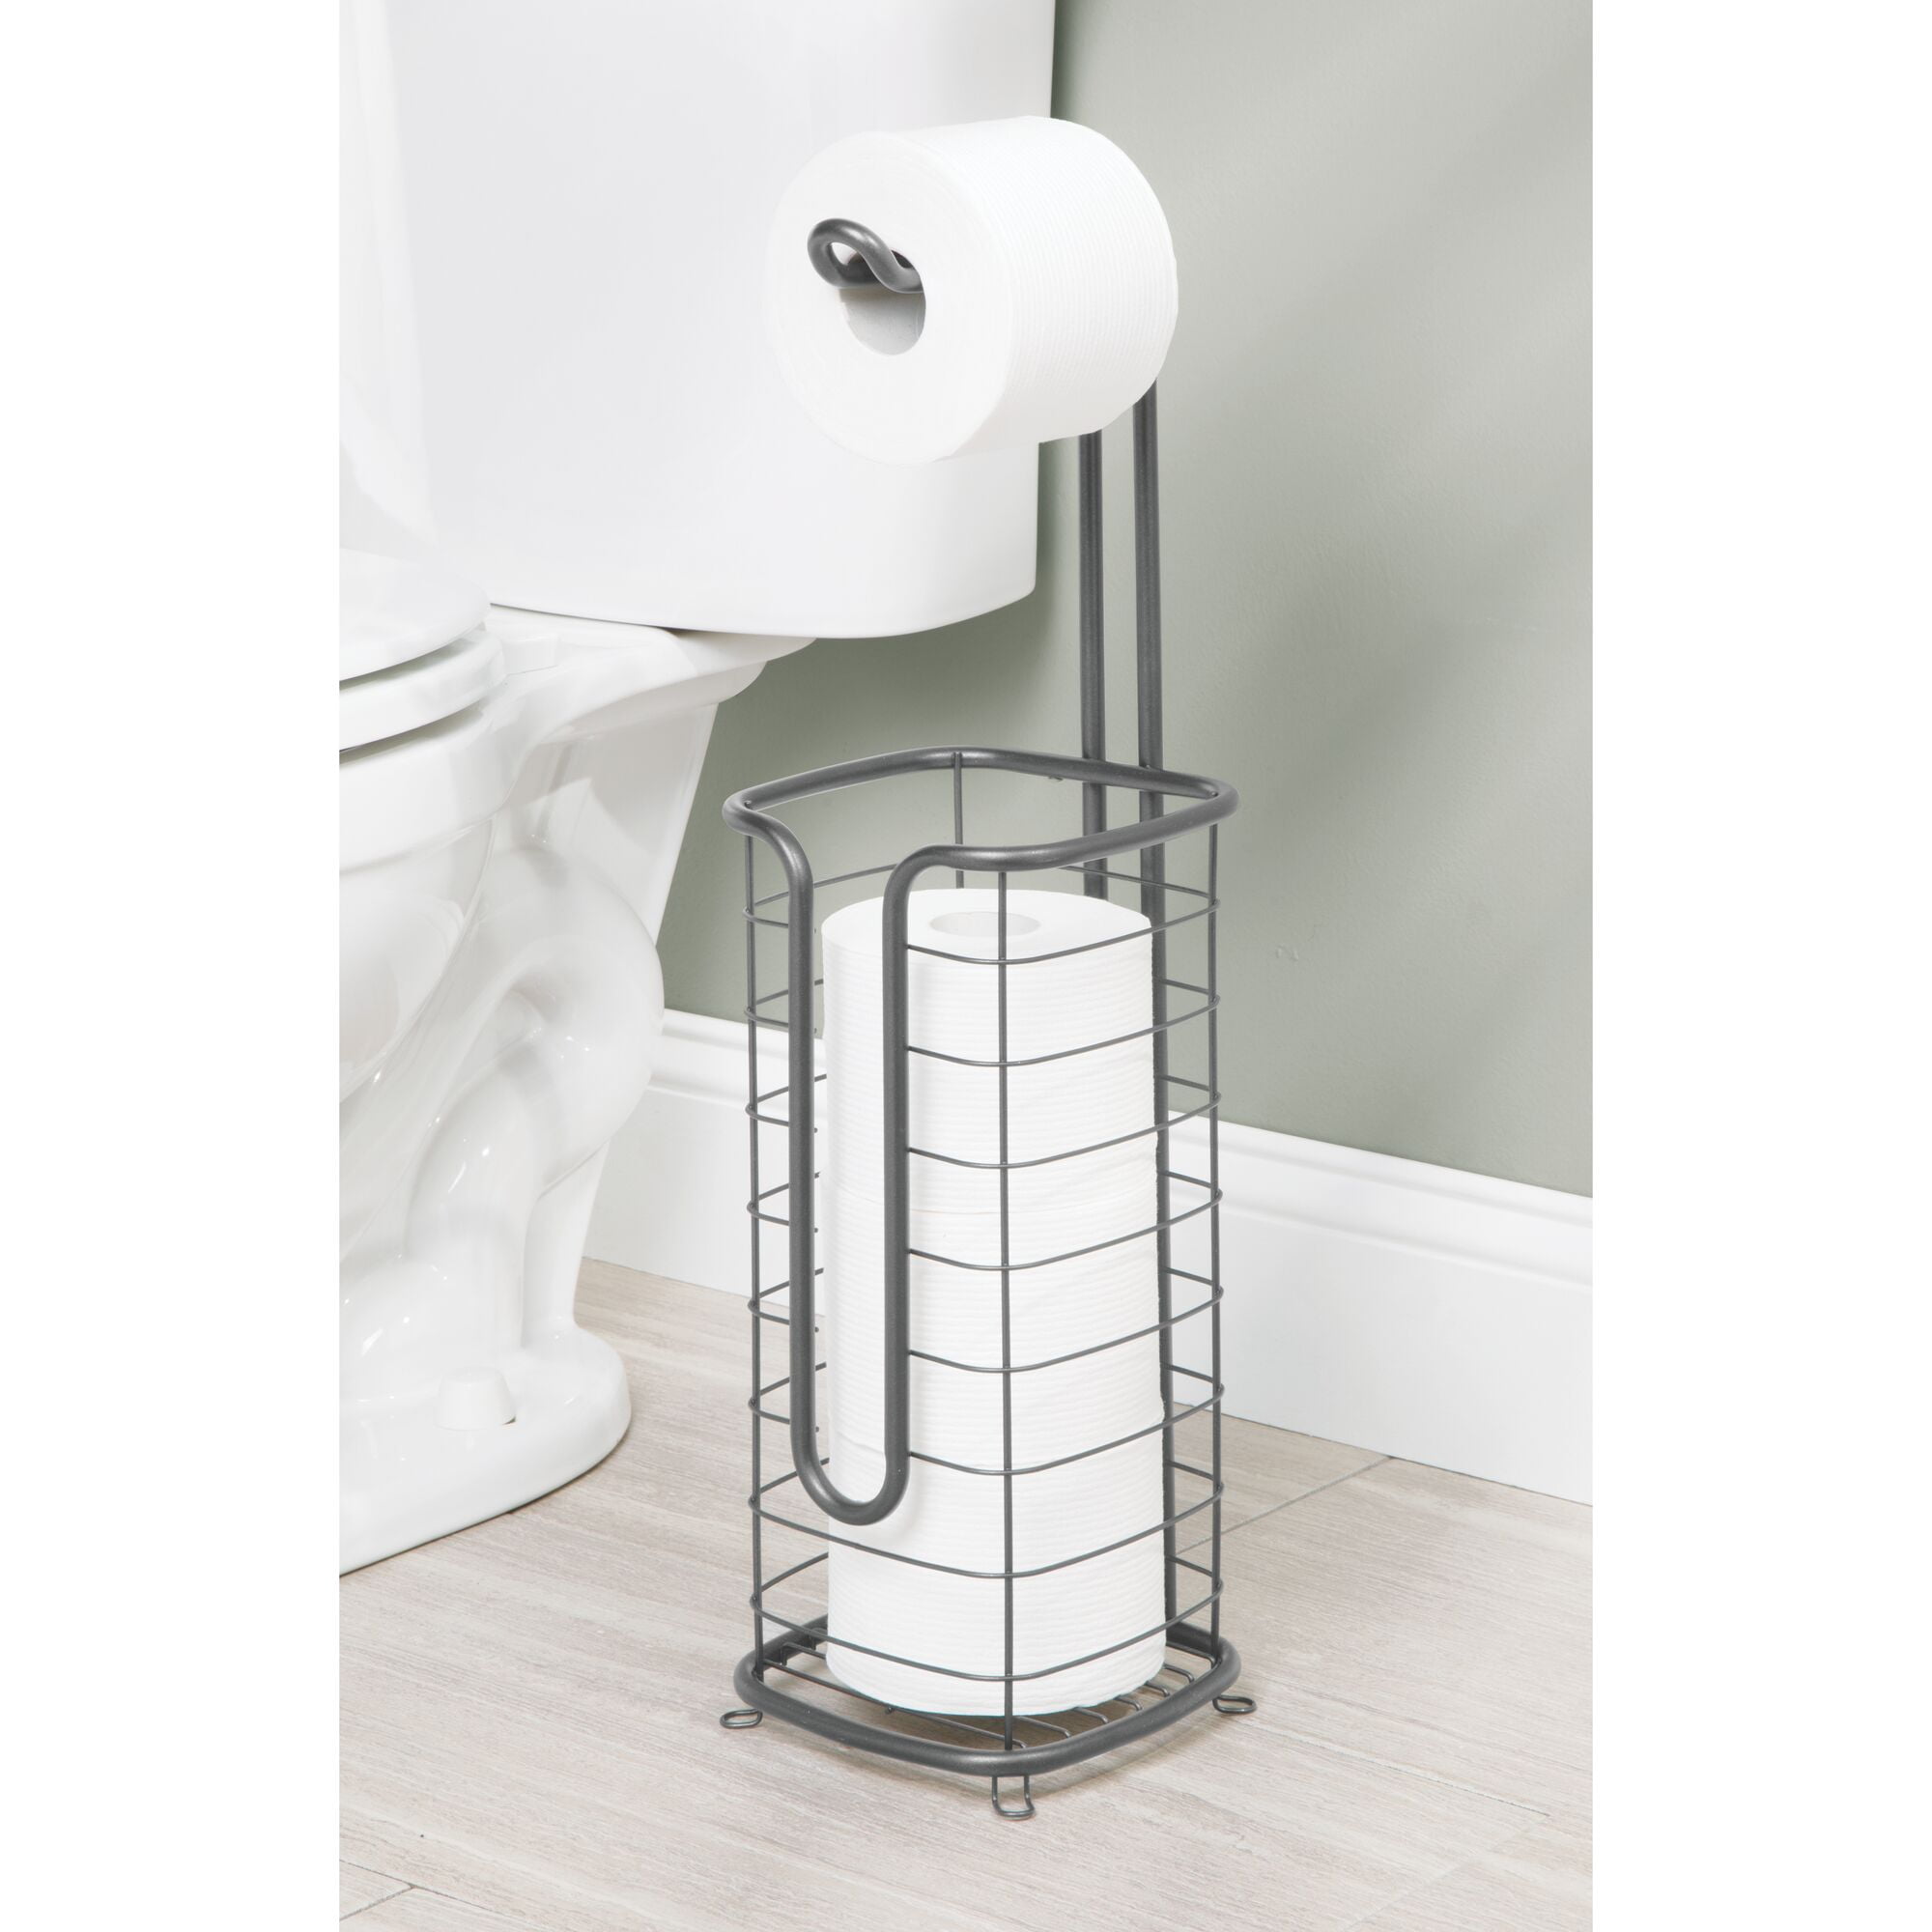 Mdesign Modern Narrow Toilet Paper Roll 2-tier Holder Stand : Target